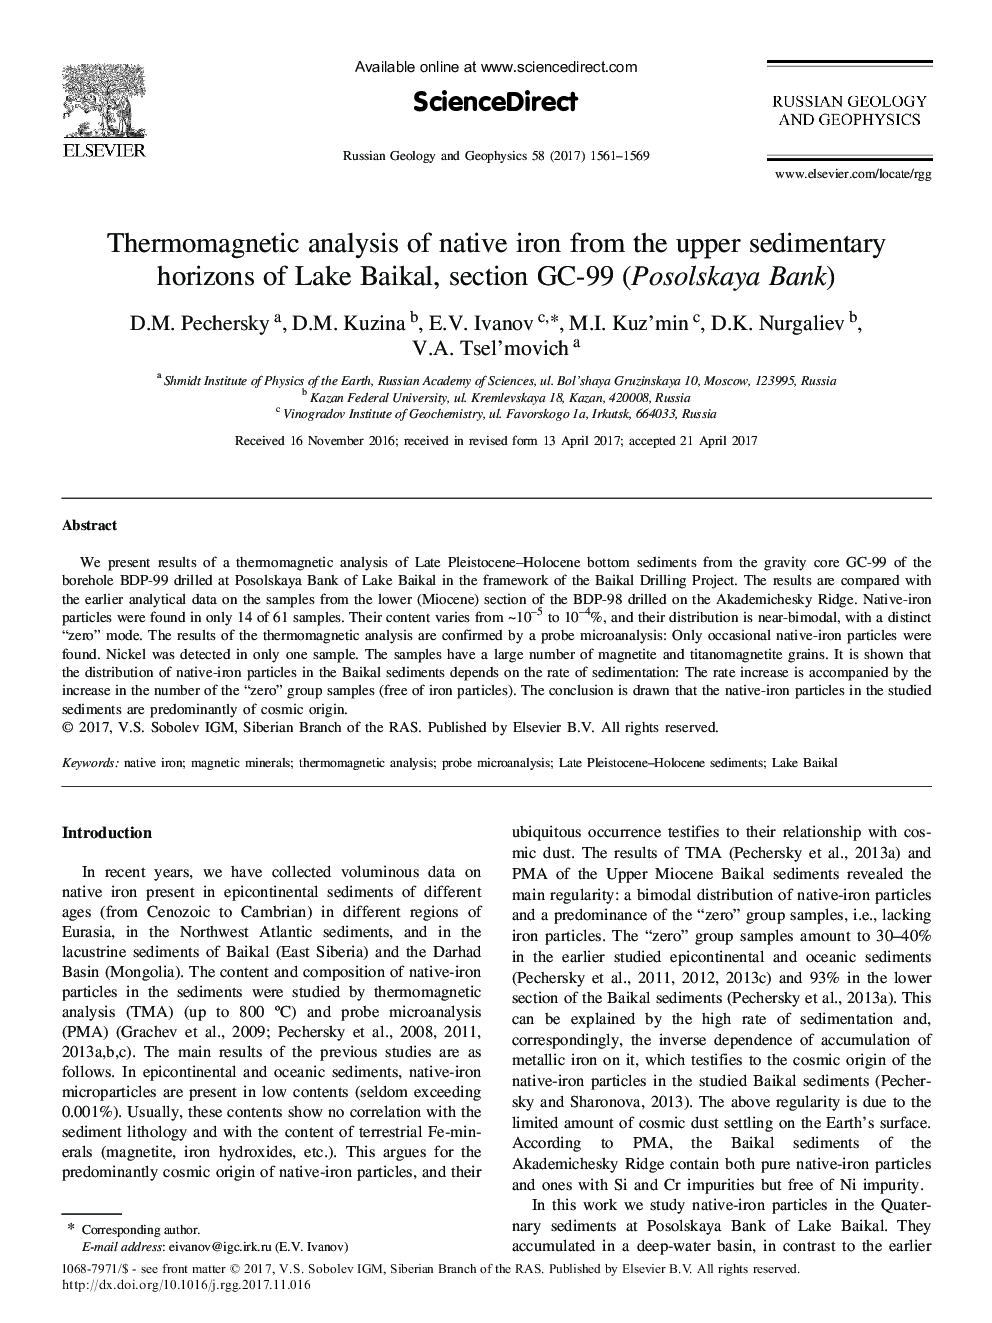 Thermomagnetic analysis of native iron from the upper sedimentary horizons of Lake Baikal, section GC-99 (Posolskaya Bank)